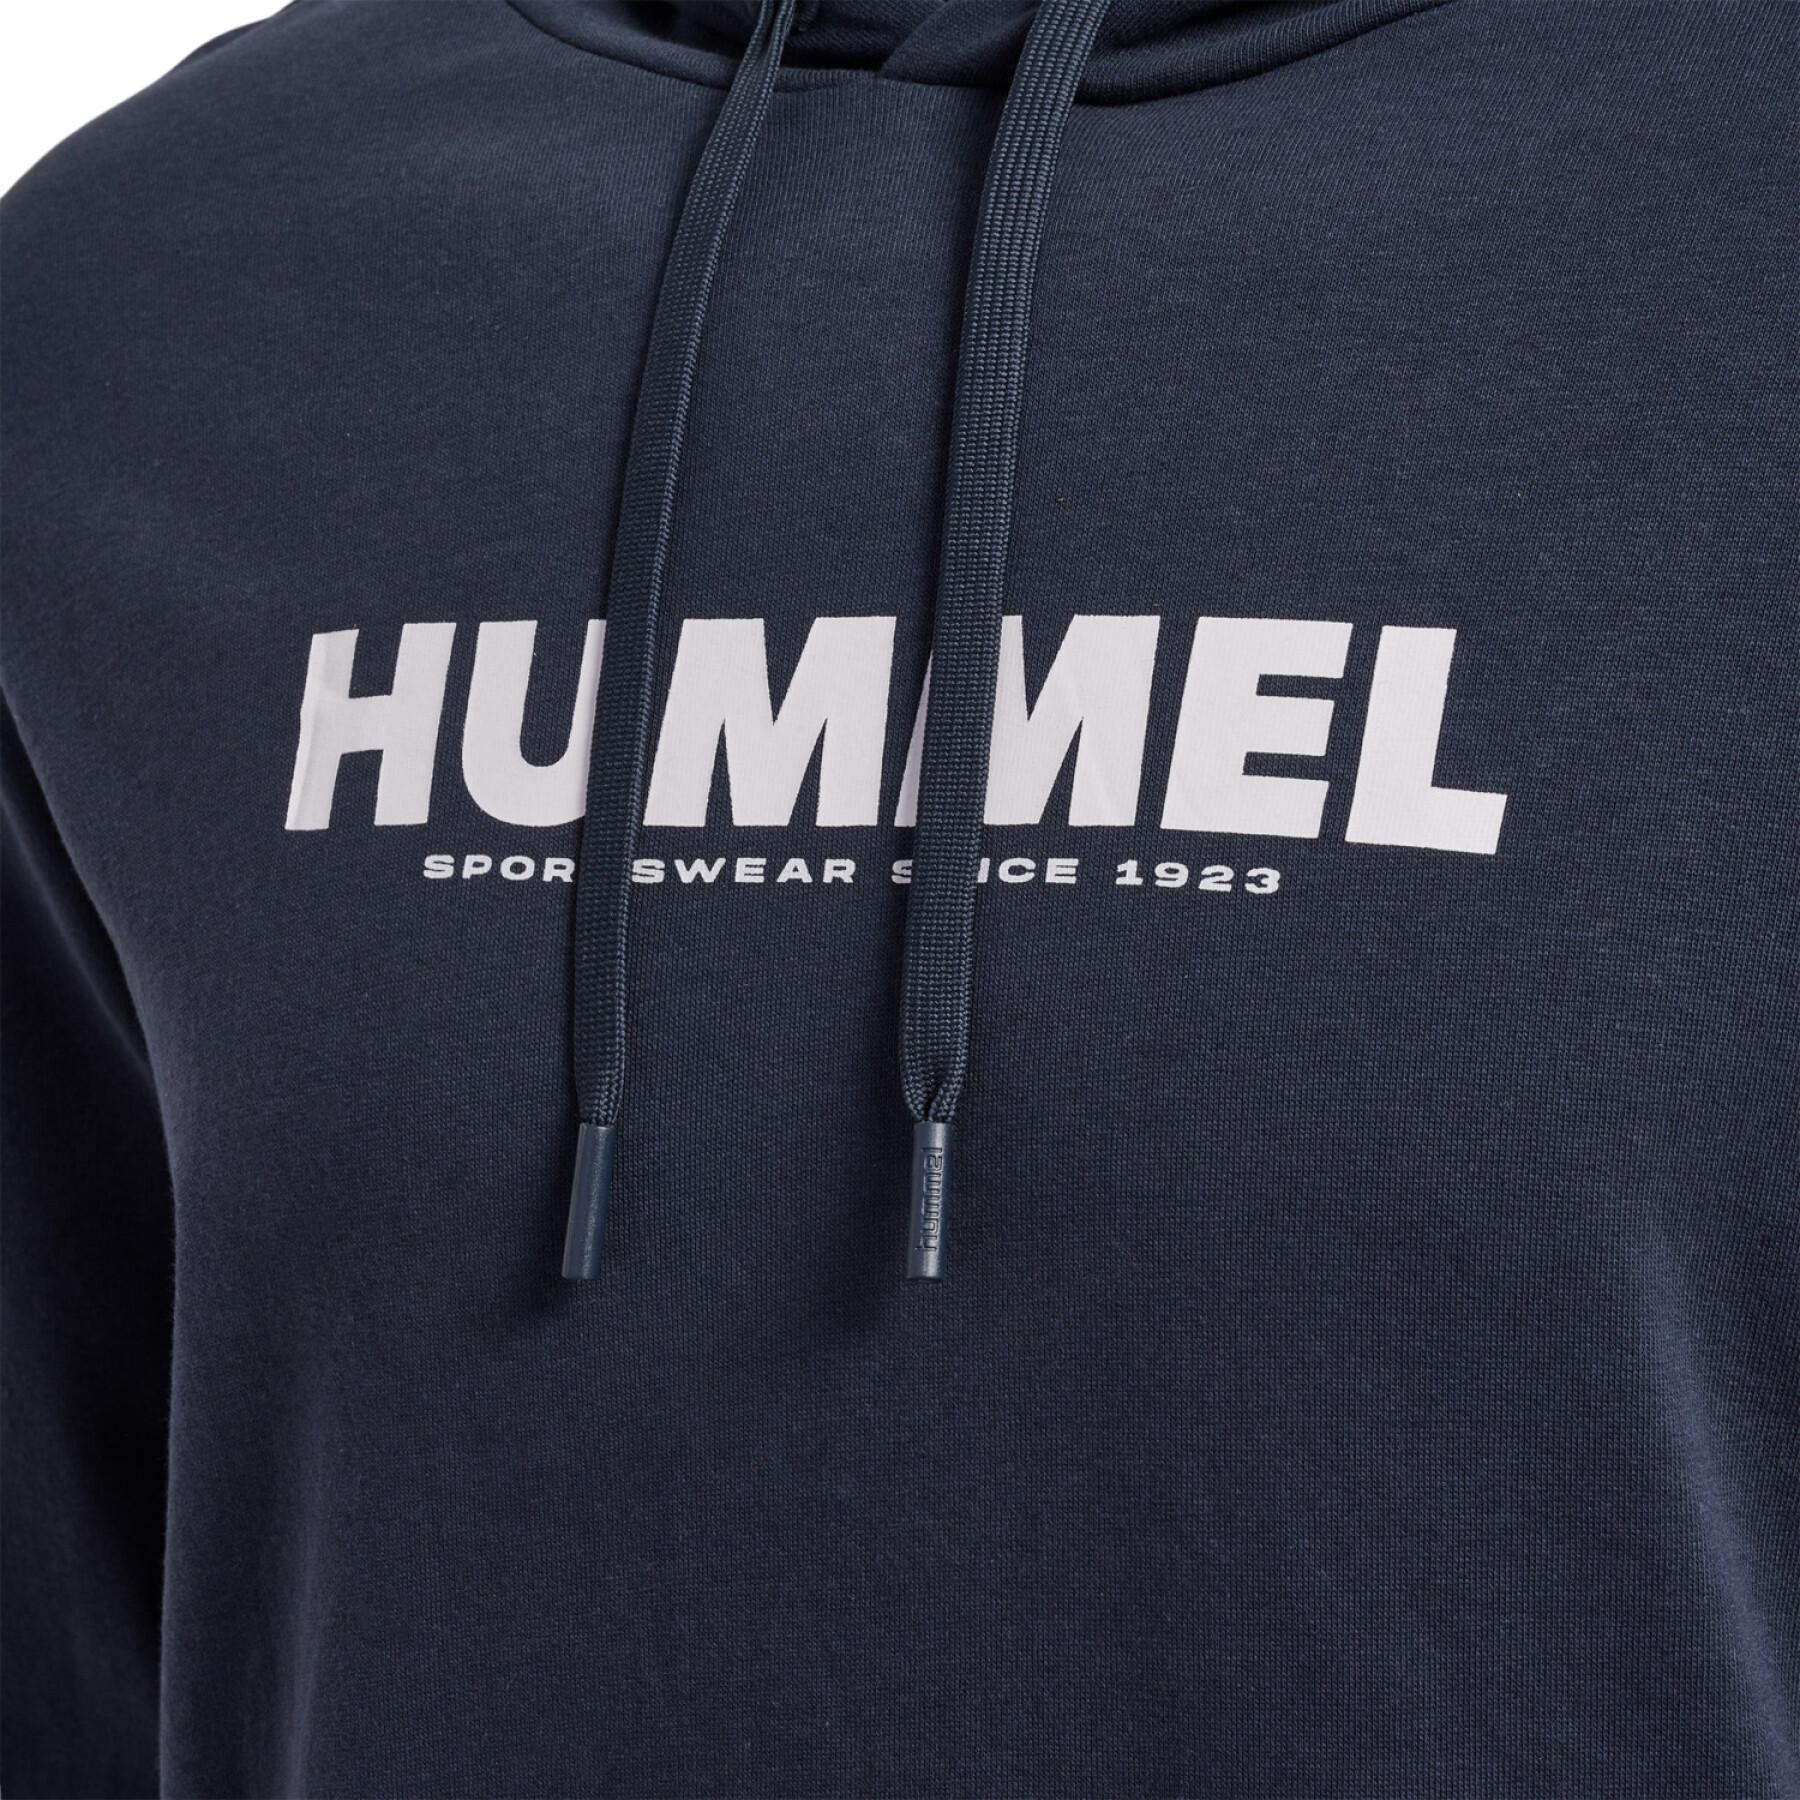 Sudadera con capucha Hummel Legacy Logo Plus